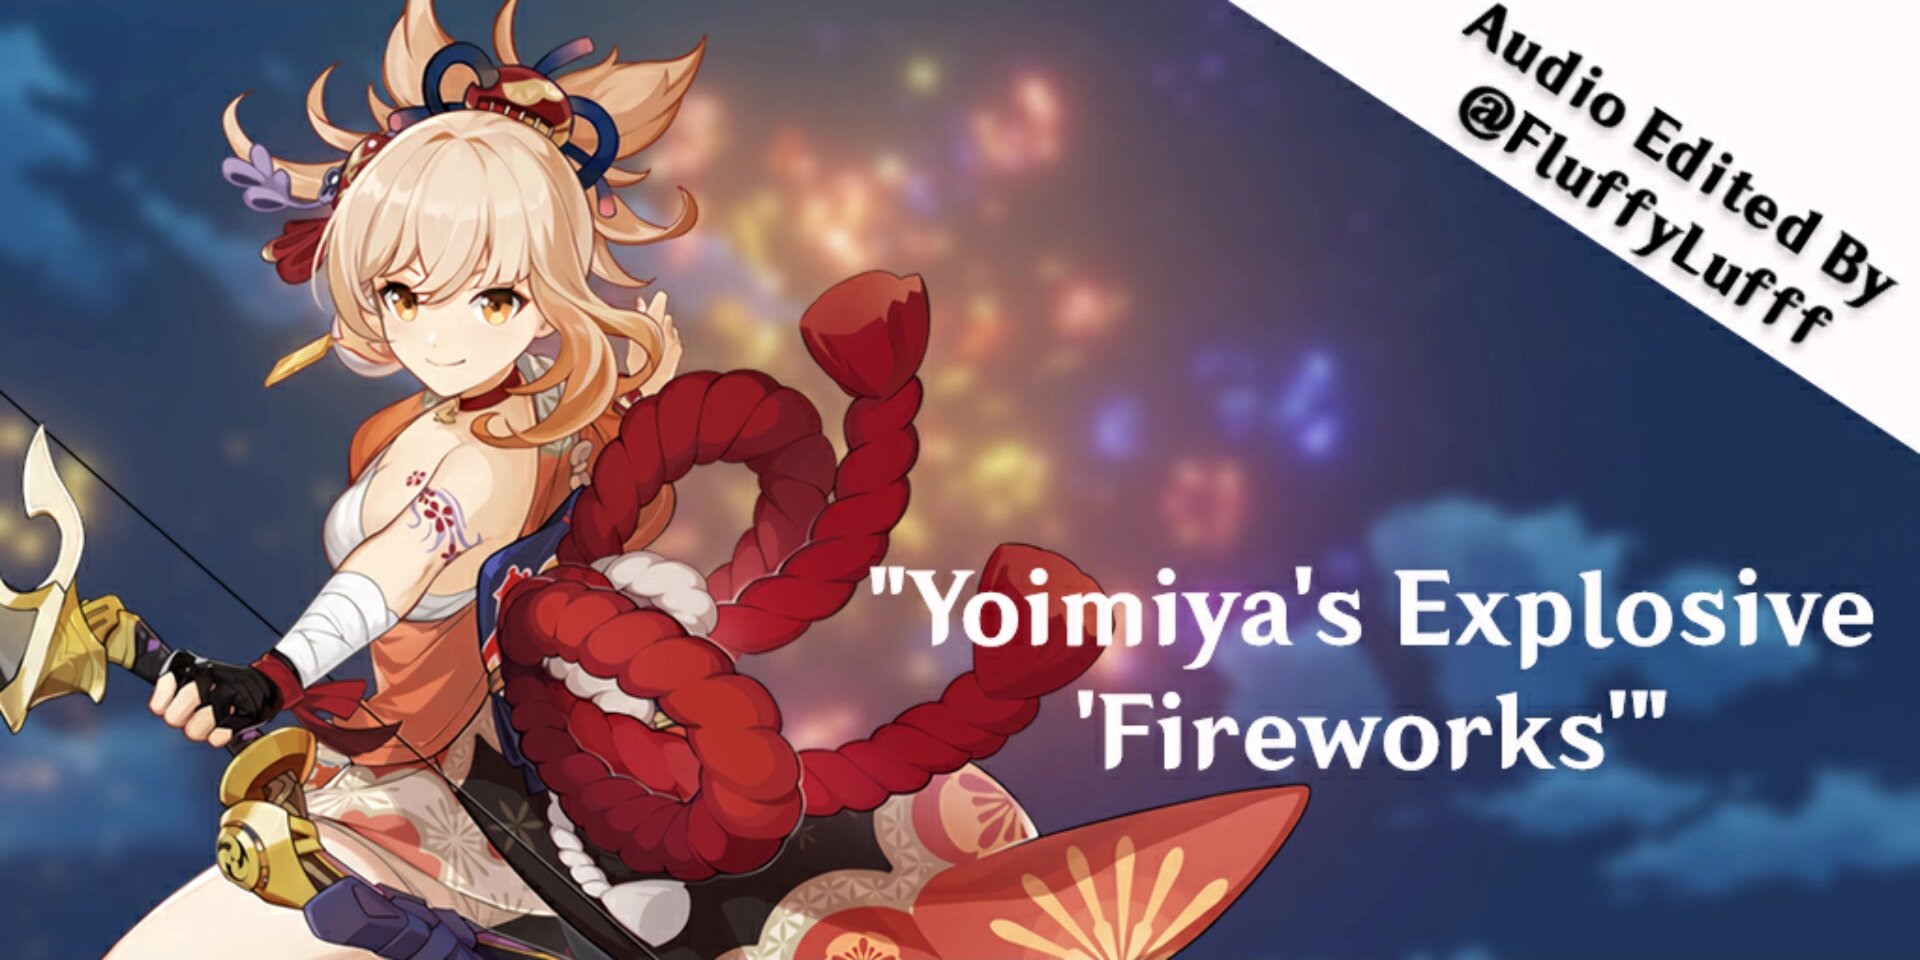 Yoimiya's explosive fireworks